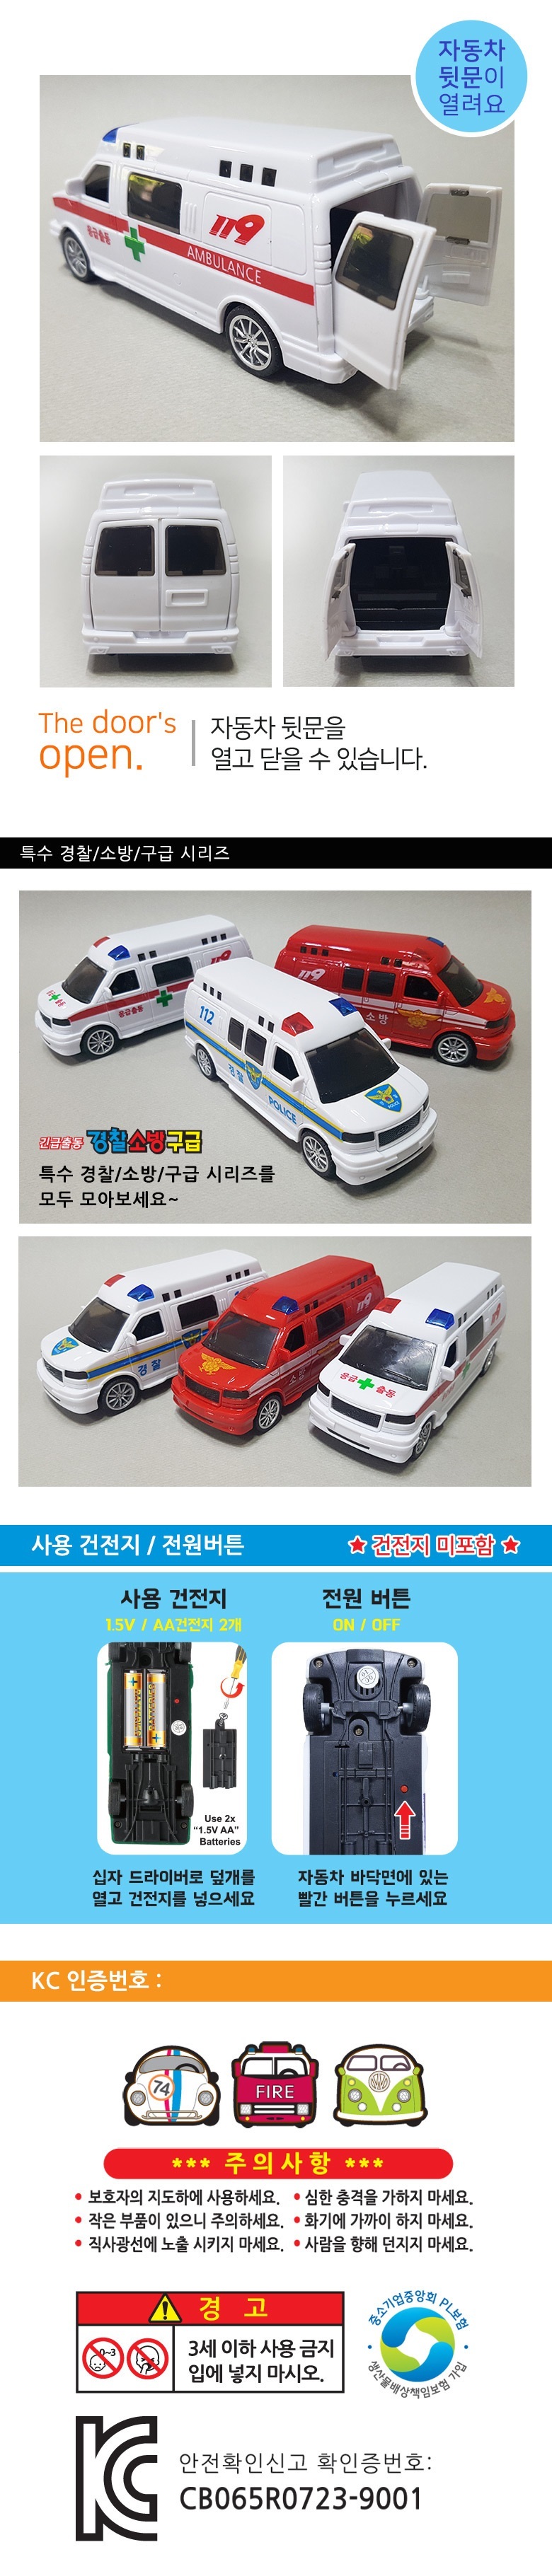 ambulance8000_2.jpg